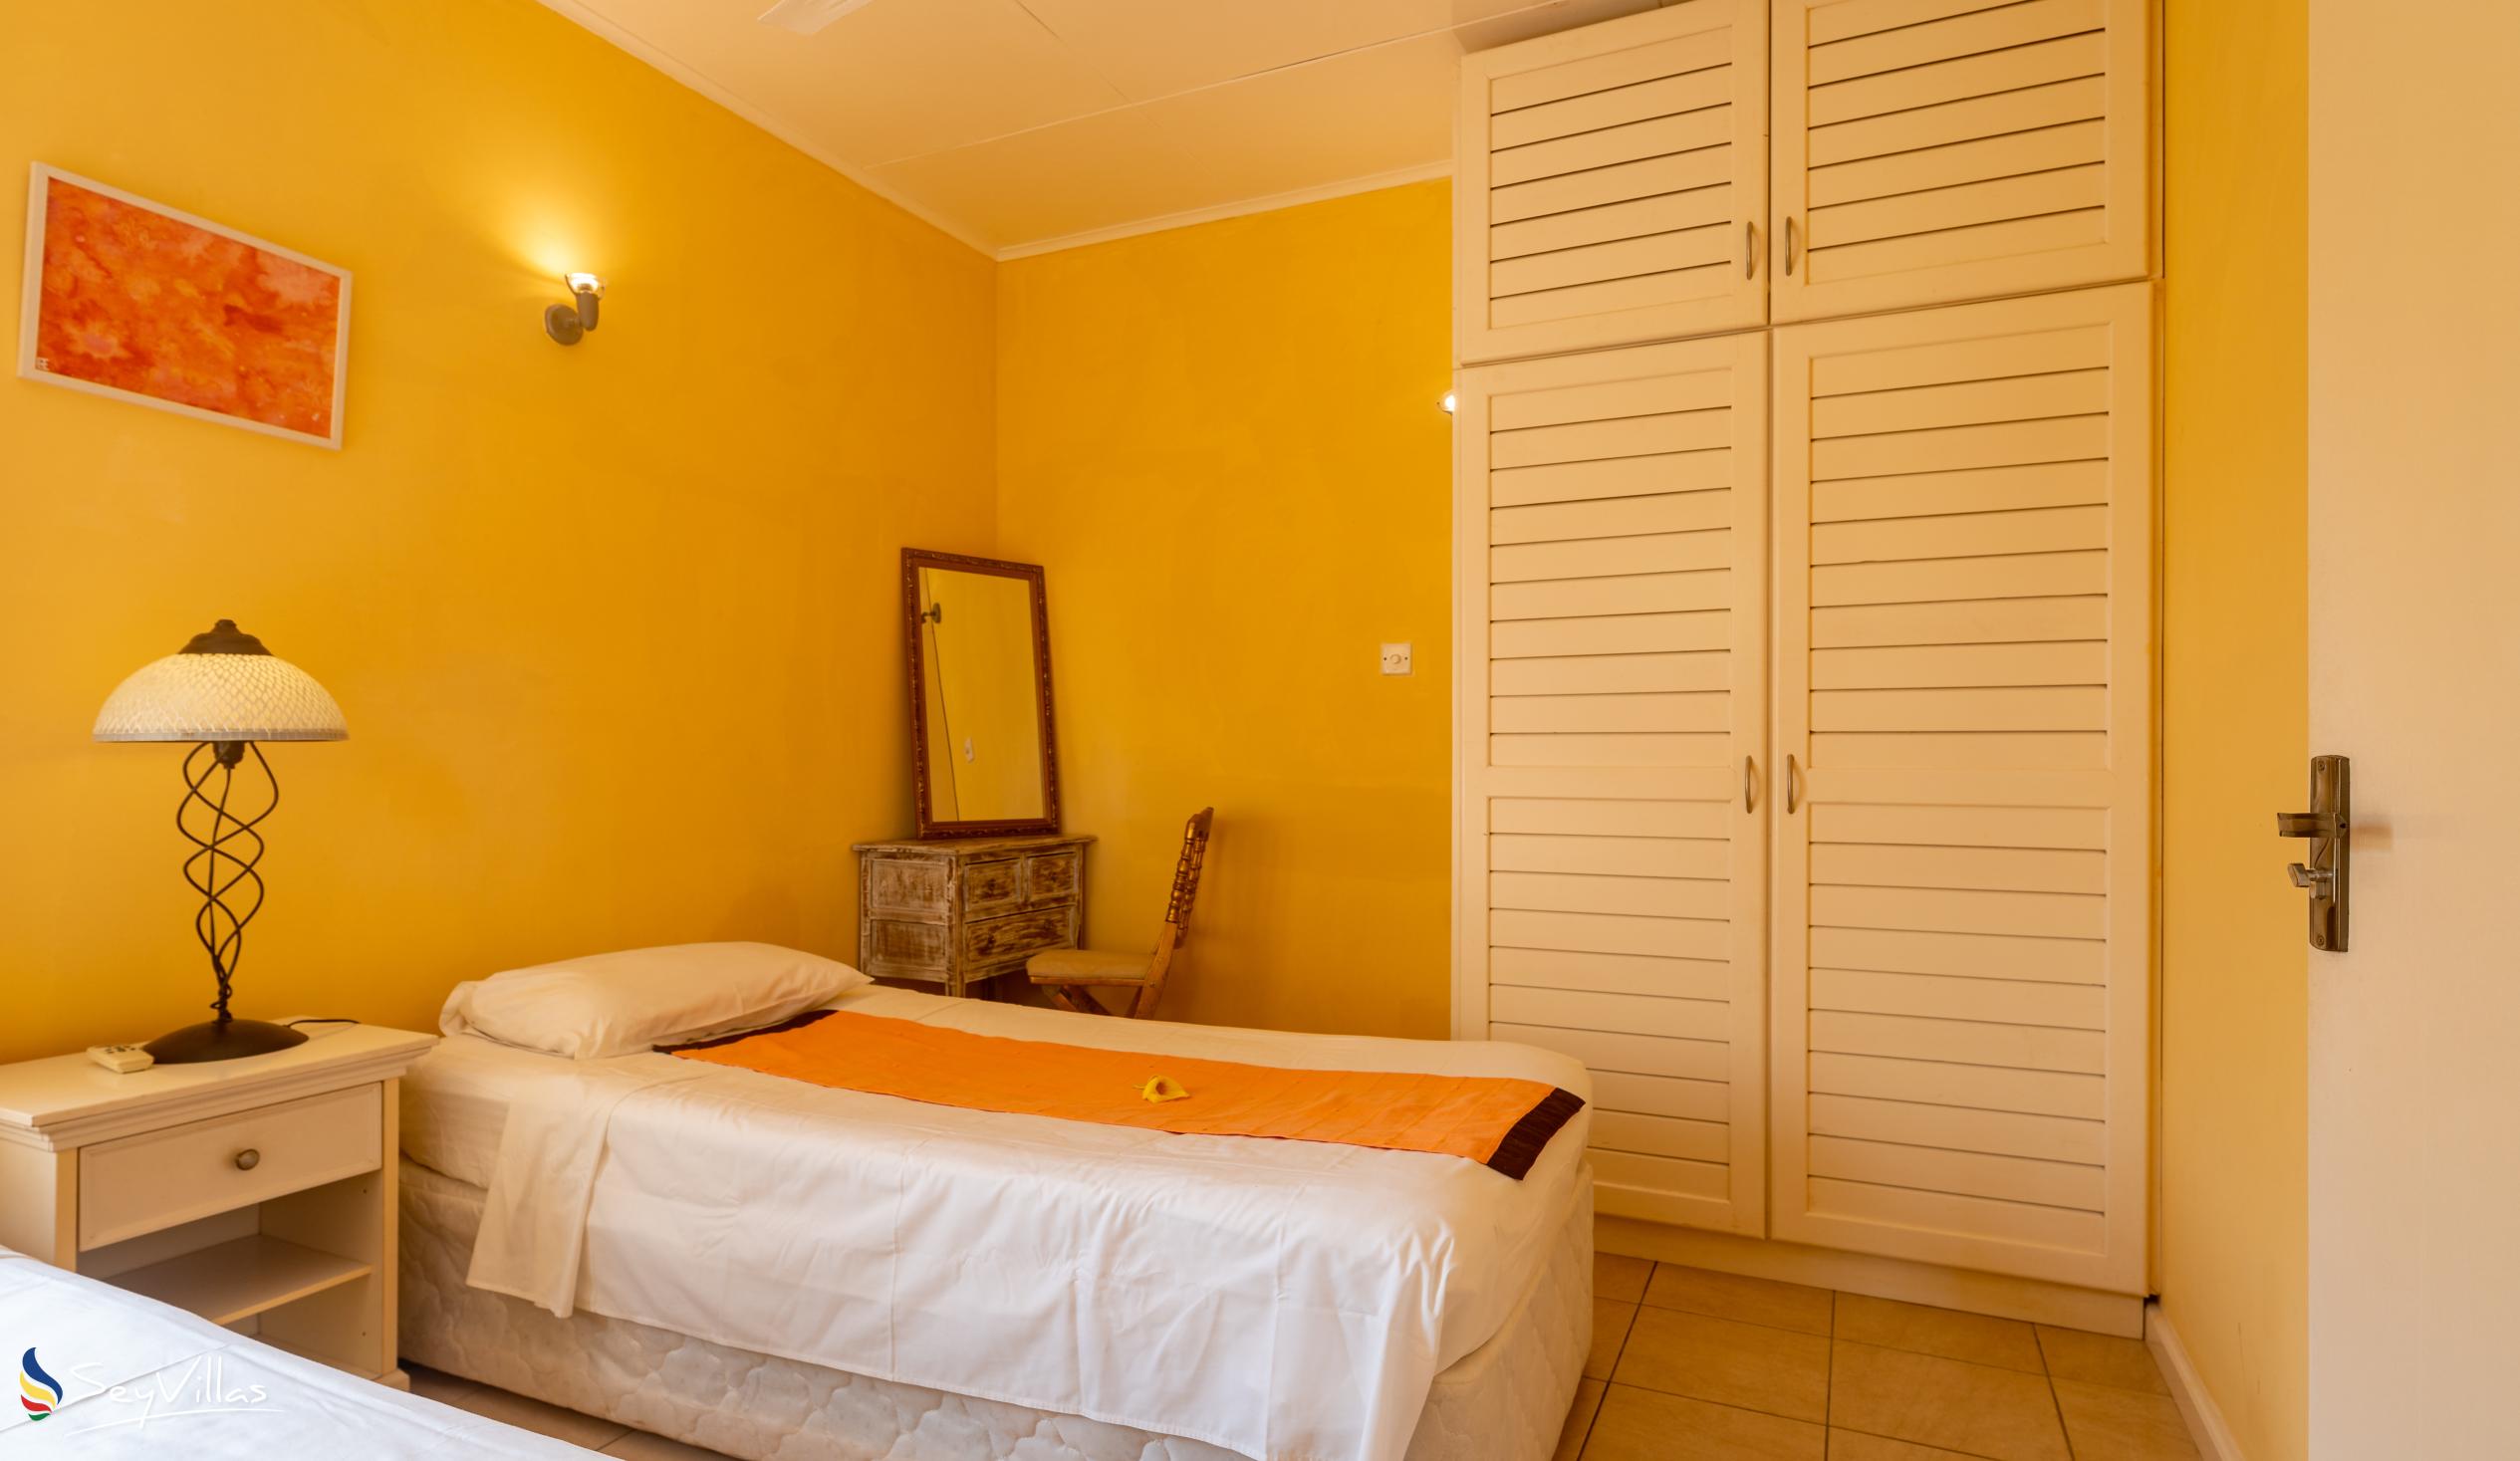 Photo 102: Residence Monte Cristo - 3-Bedroom Duplex - Mahé (Seychelles)